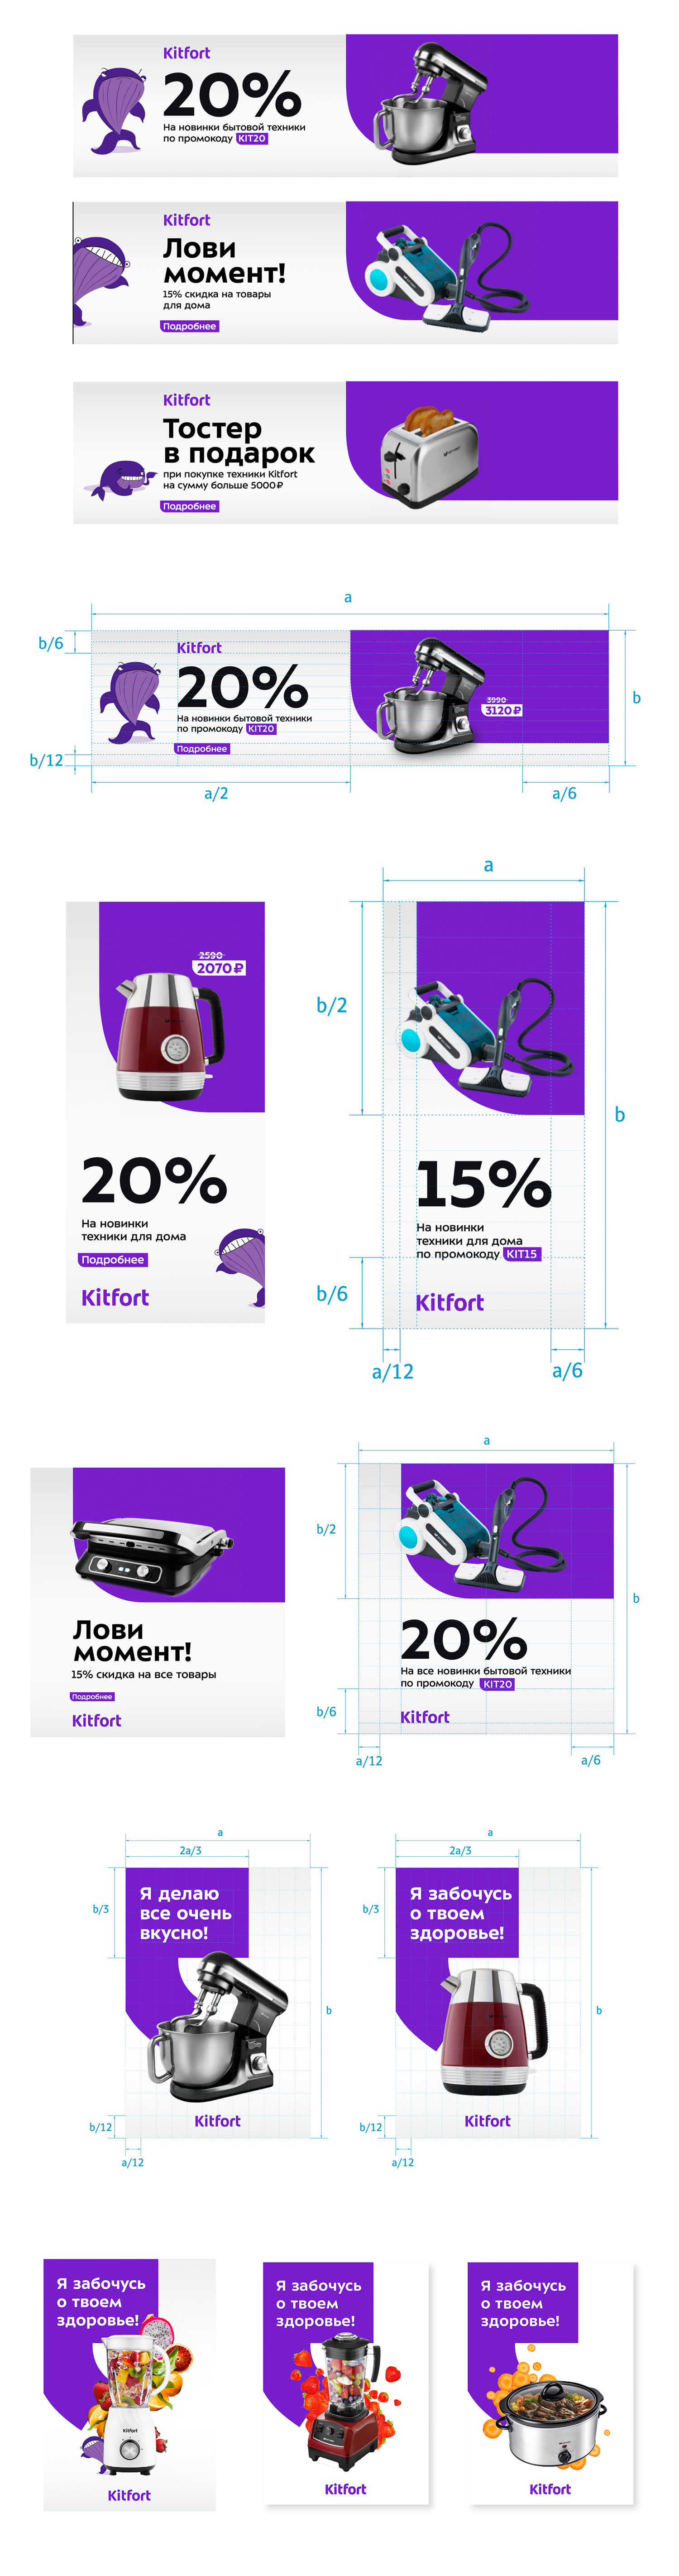 kitfort ads process 01